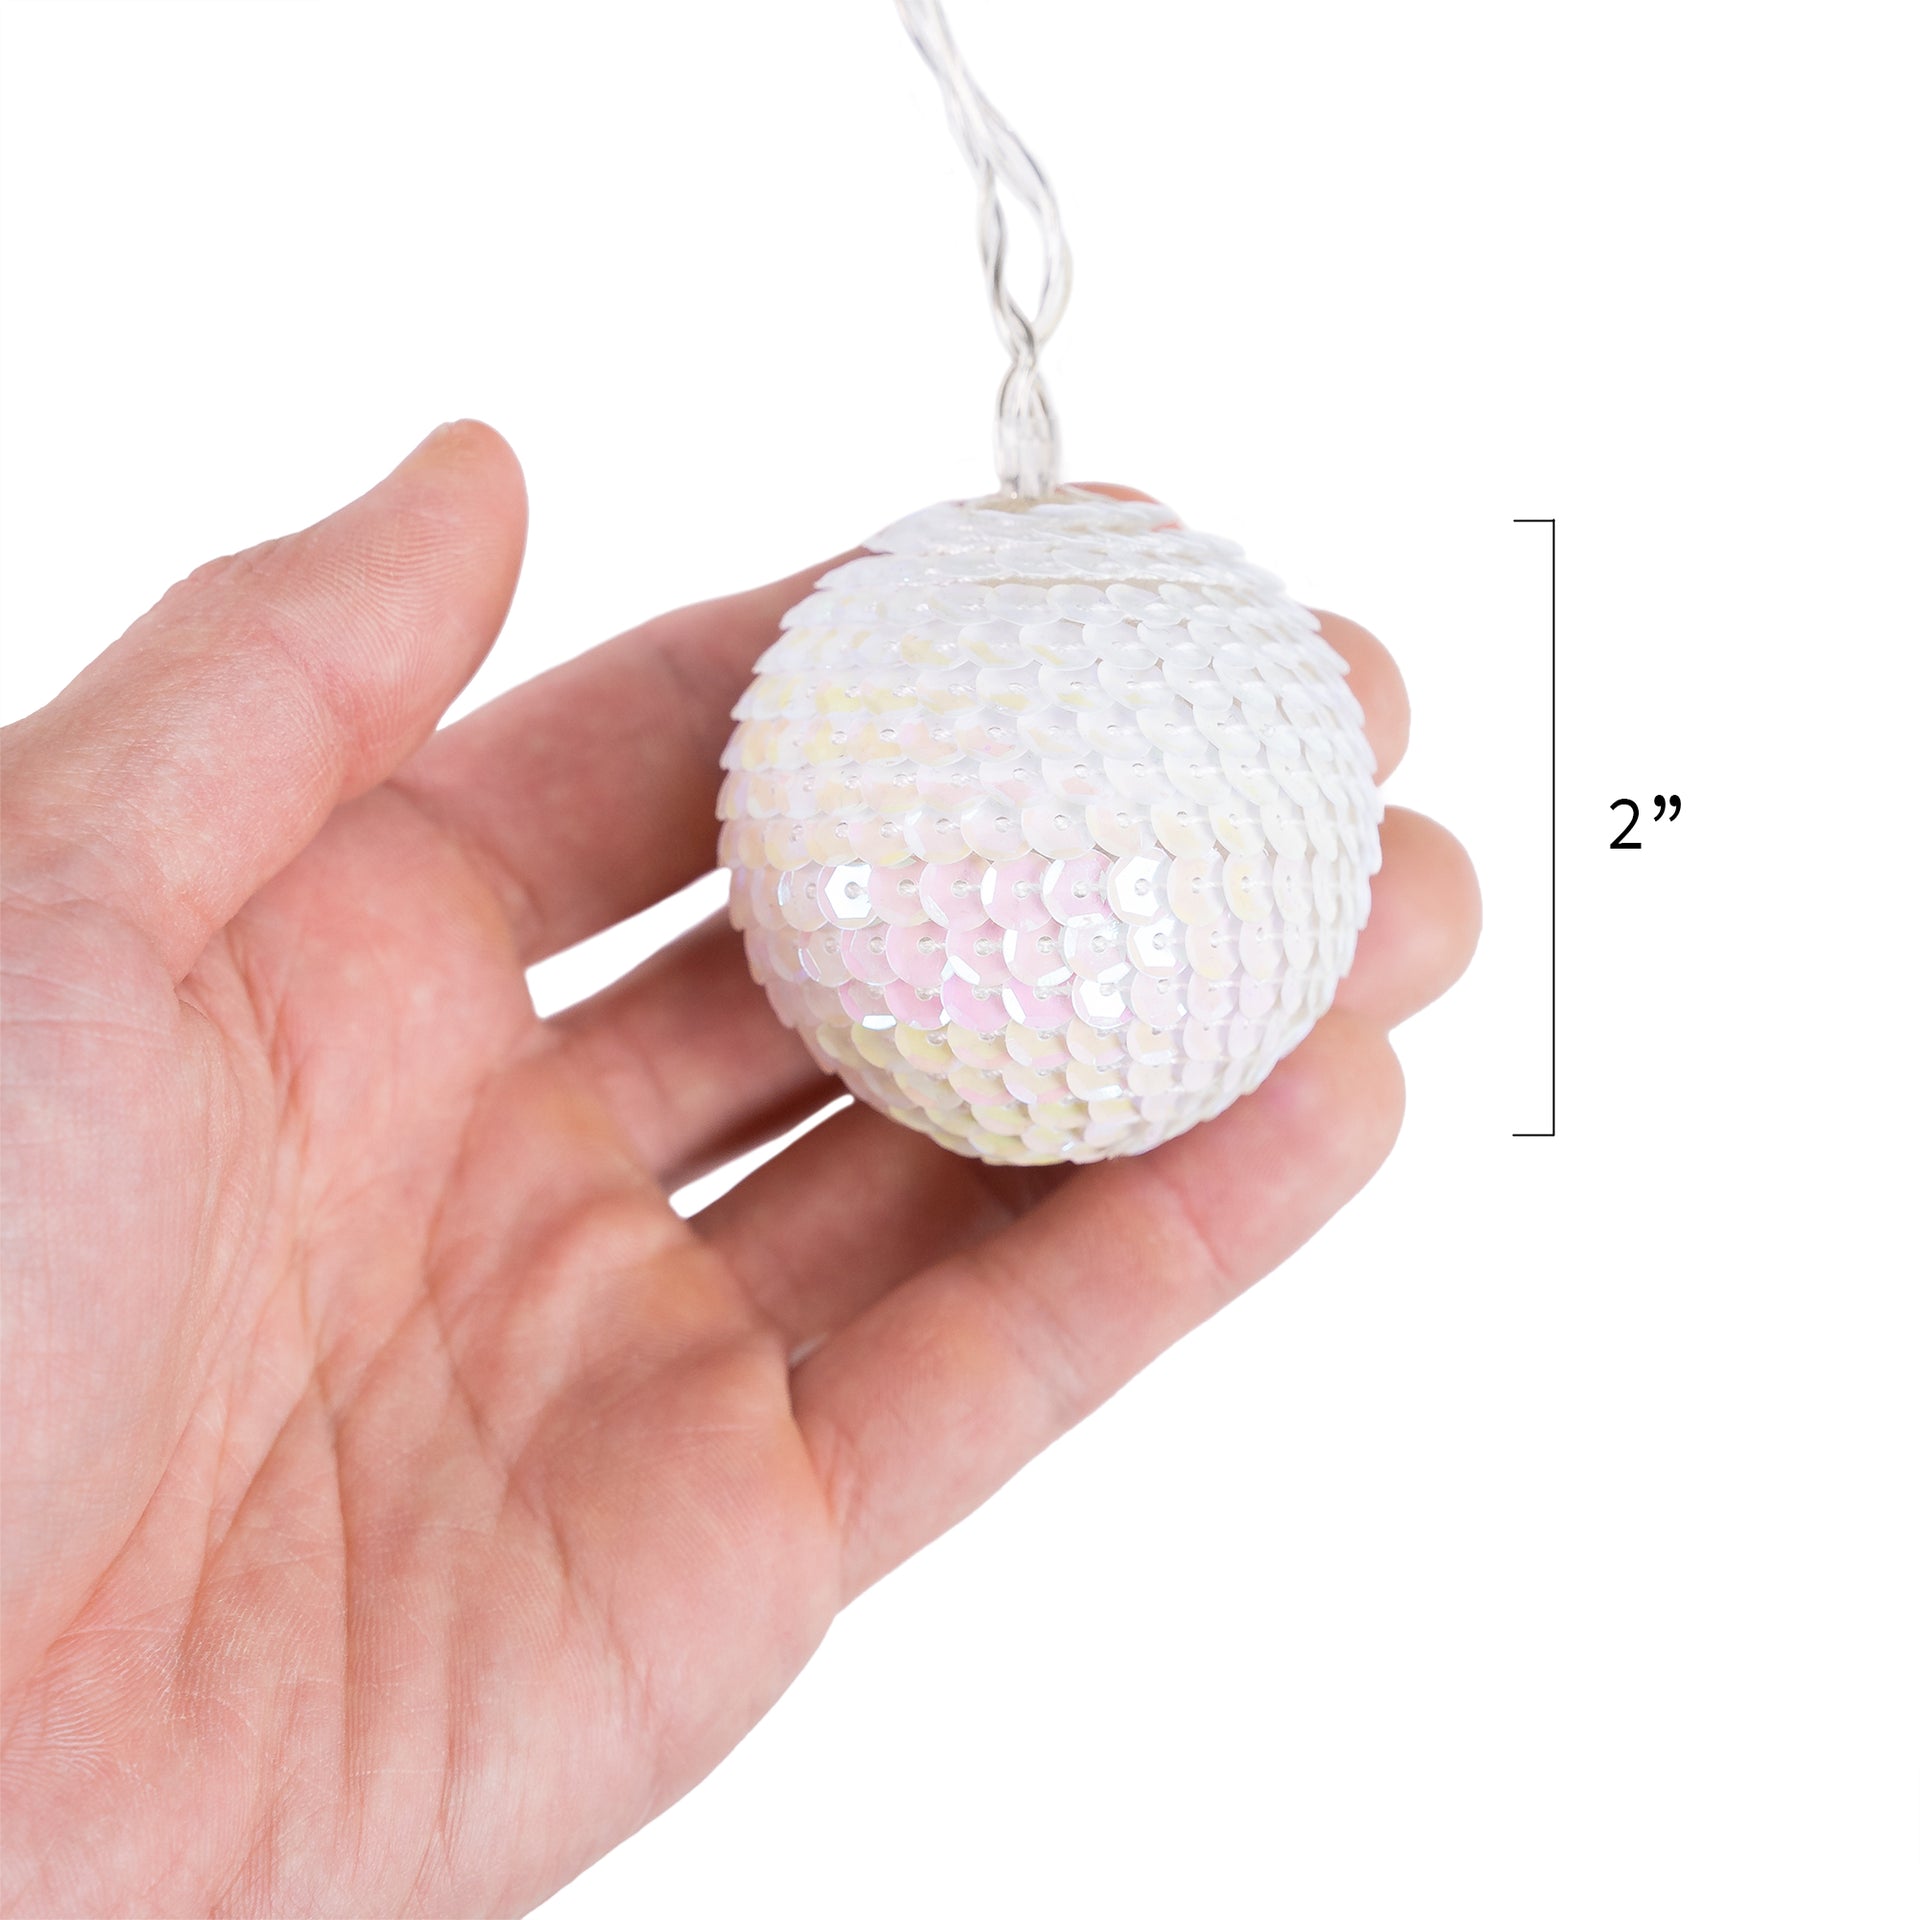 10 LED Sequined Globe Balls String Fairy Light 6 feet  Battery Powered, Warm White - West Ivory LED Lighting 